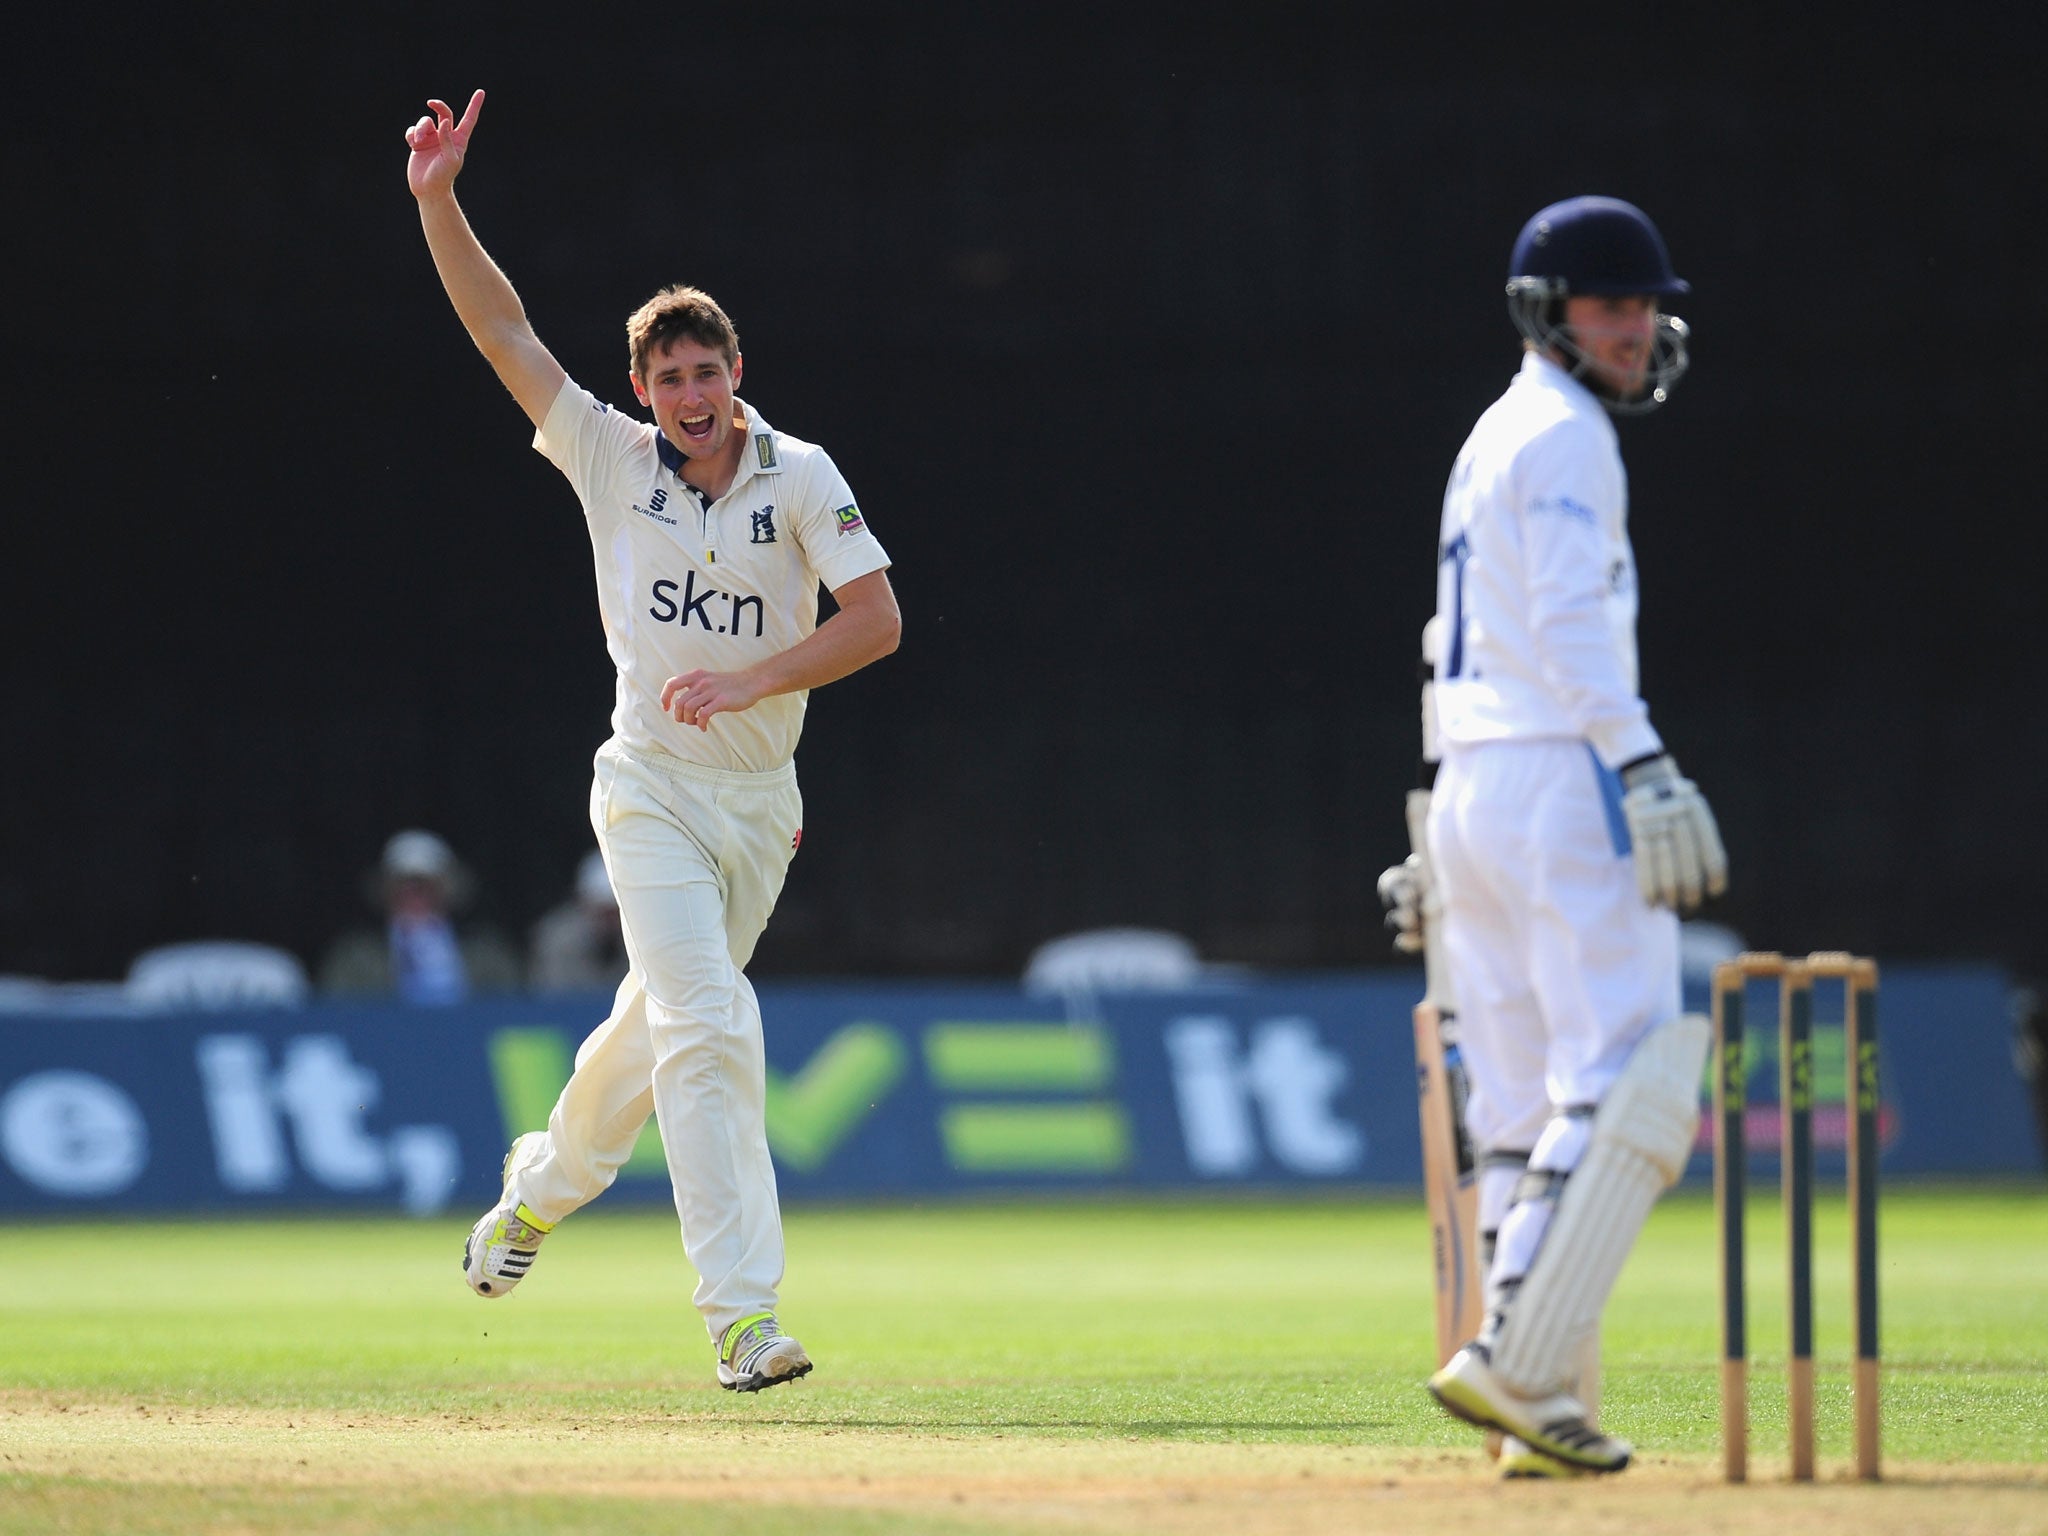 Warwickshire bowler Chris Woakes celebrates after dismissing Derbyshire batsman Paul Borrington